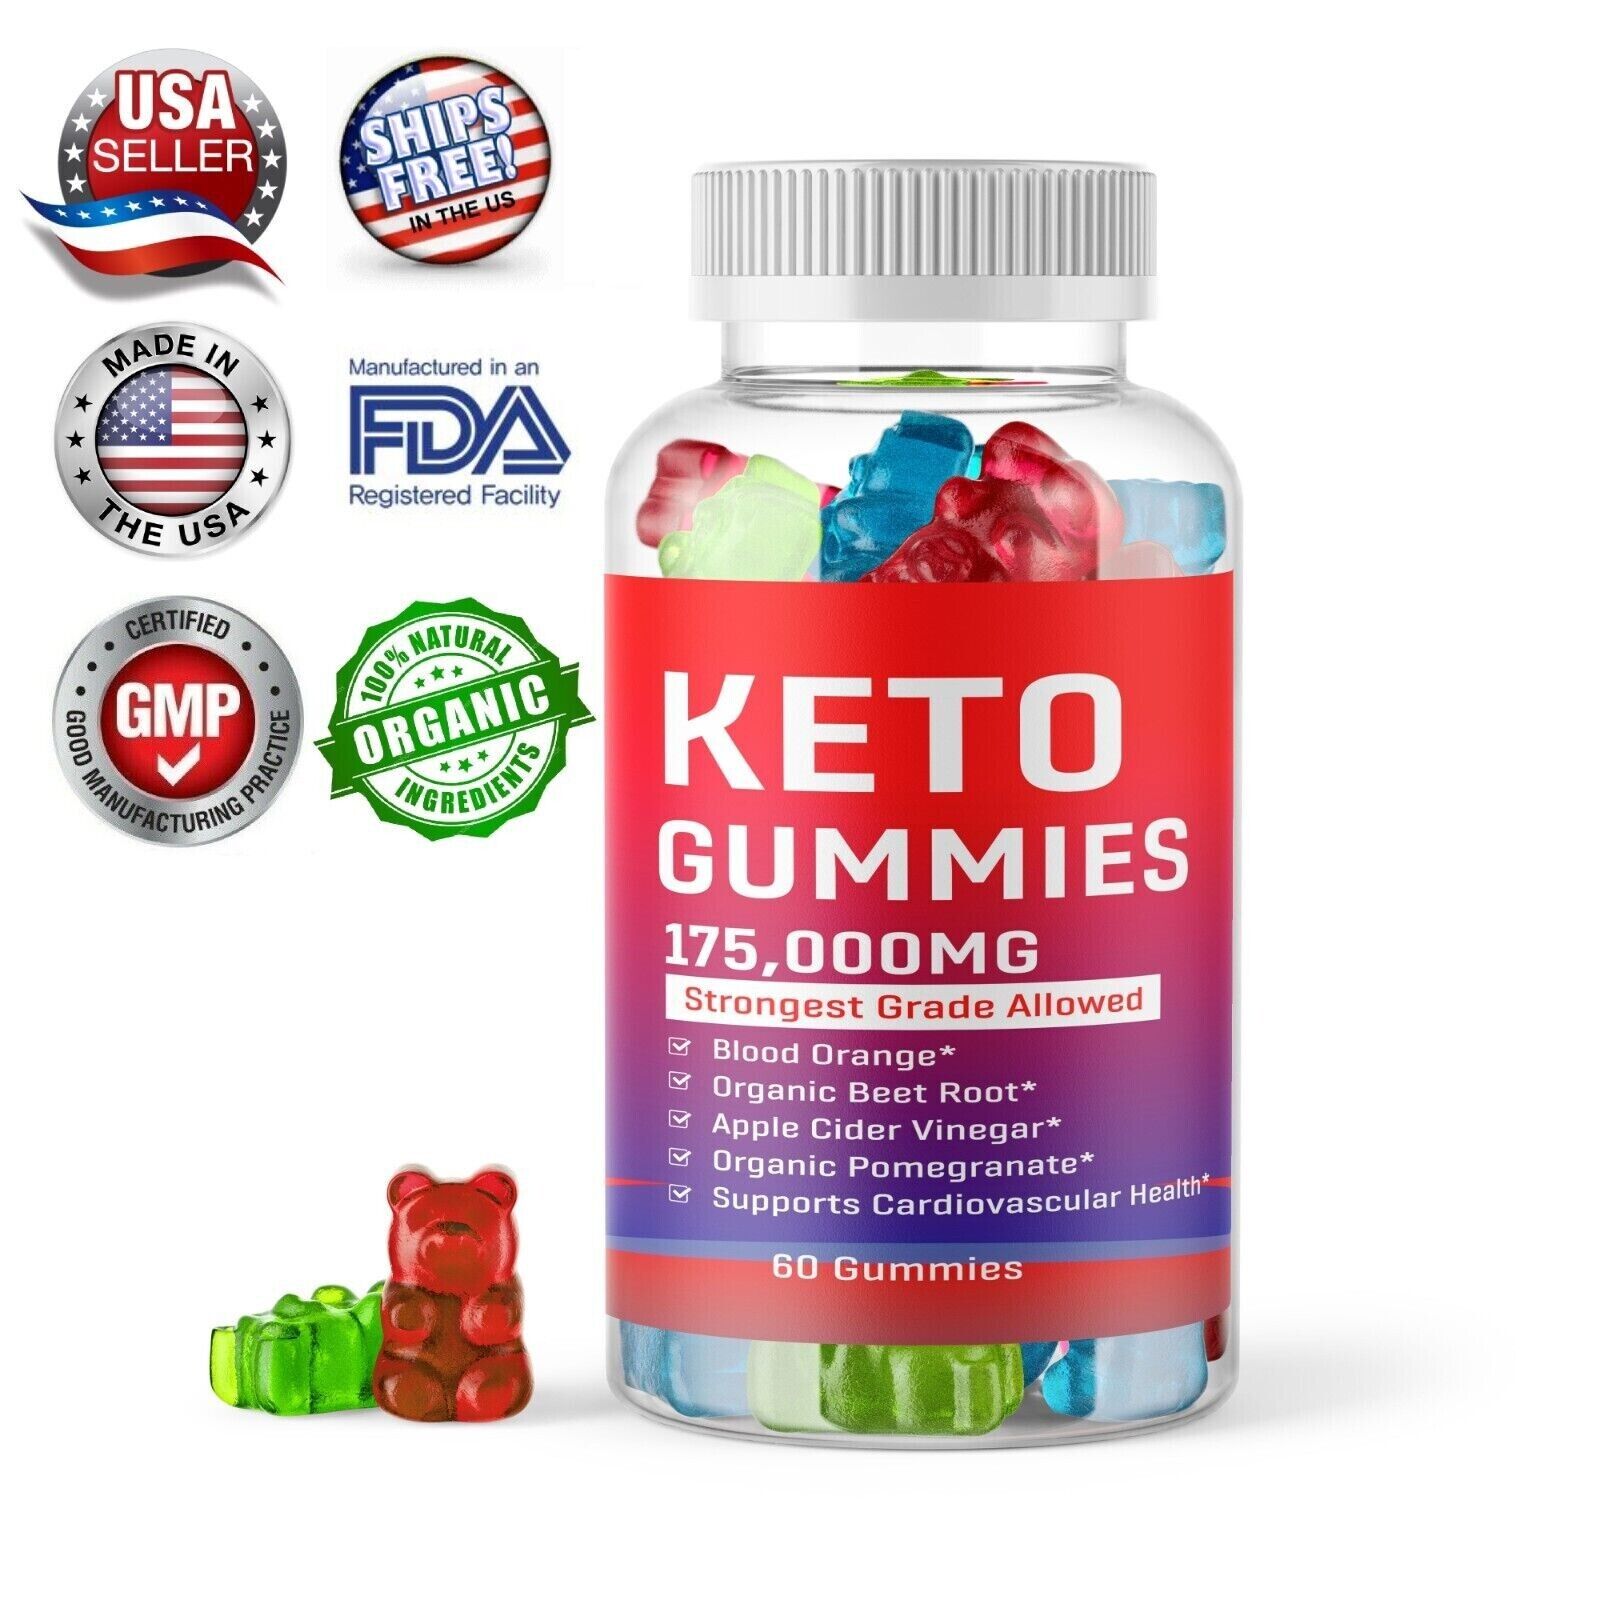 Keto ACV Slimming Gummies 175,000mg Weight Loss USA